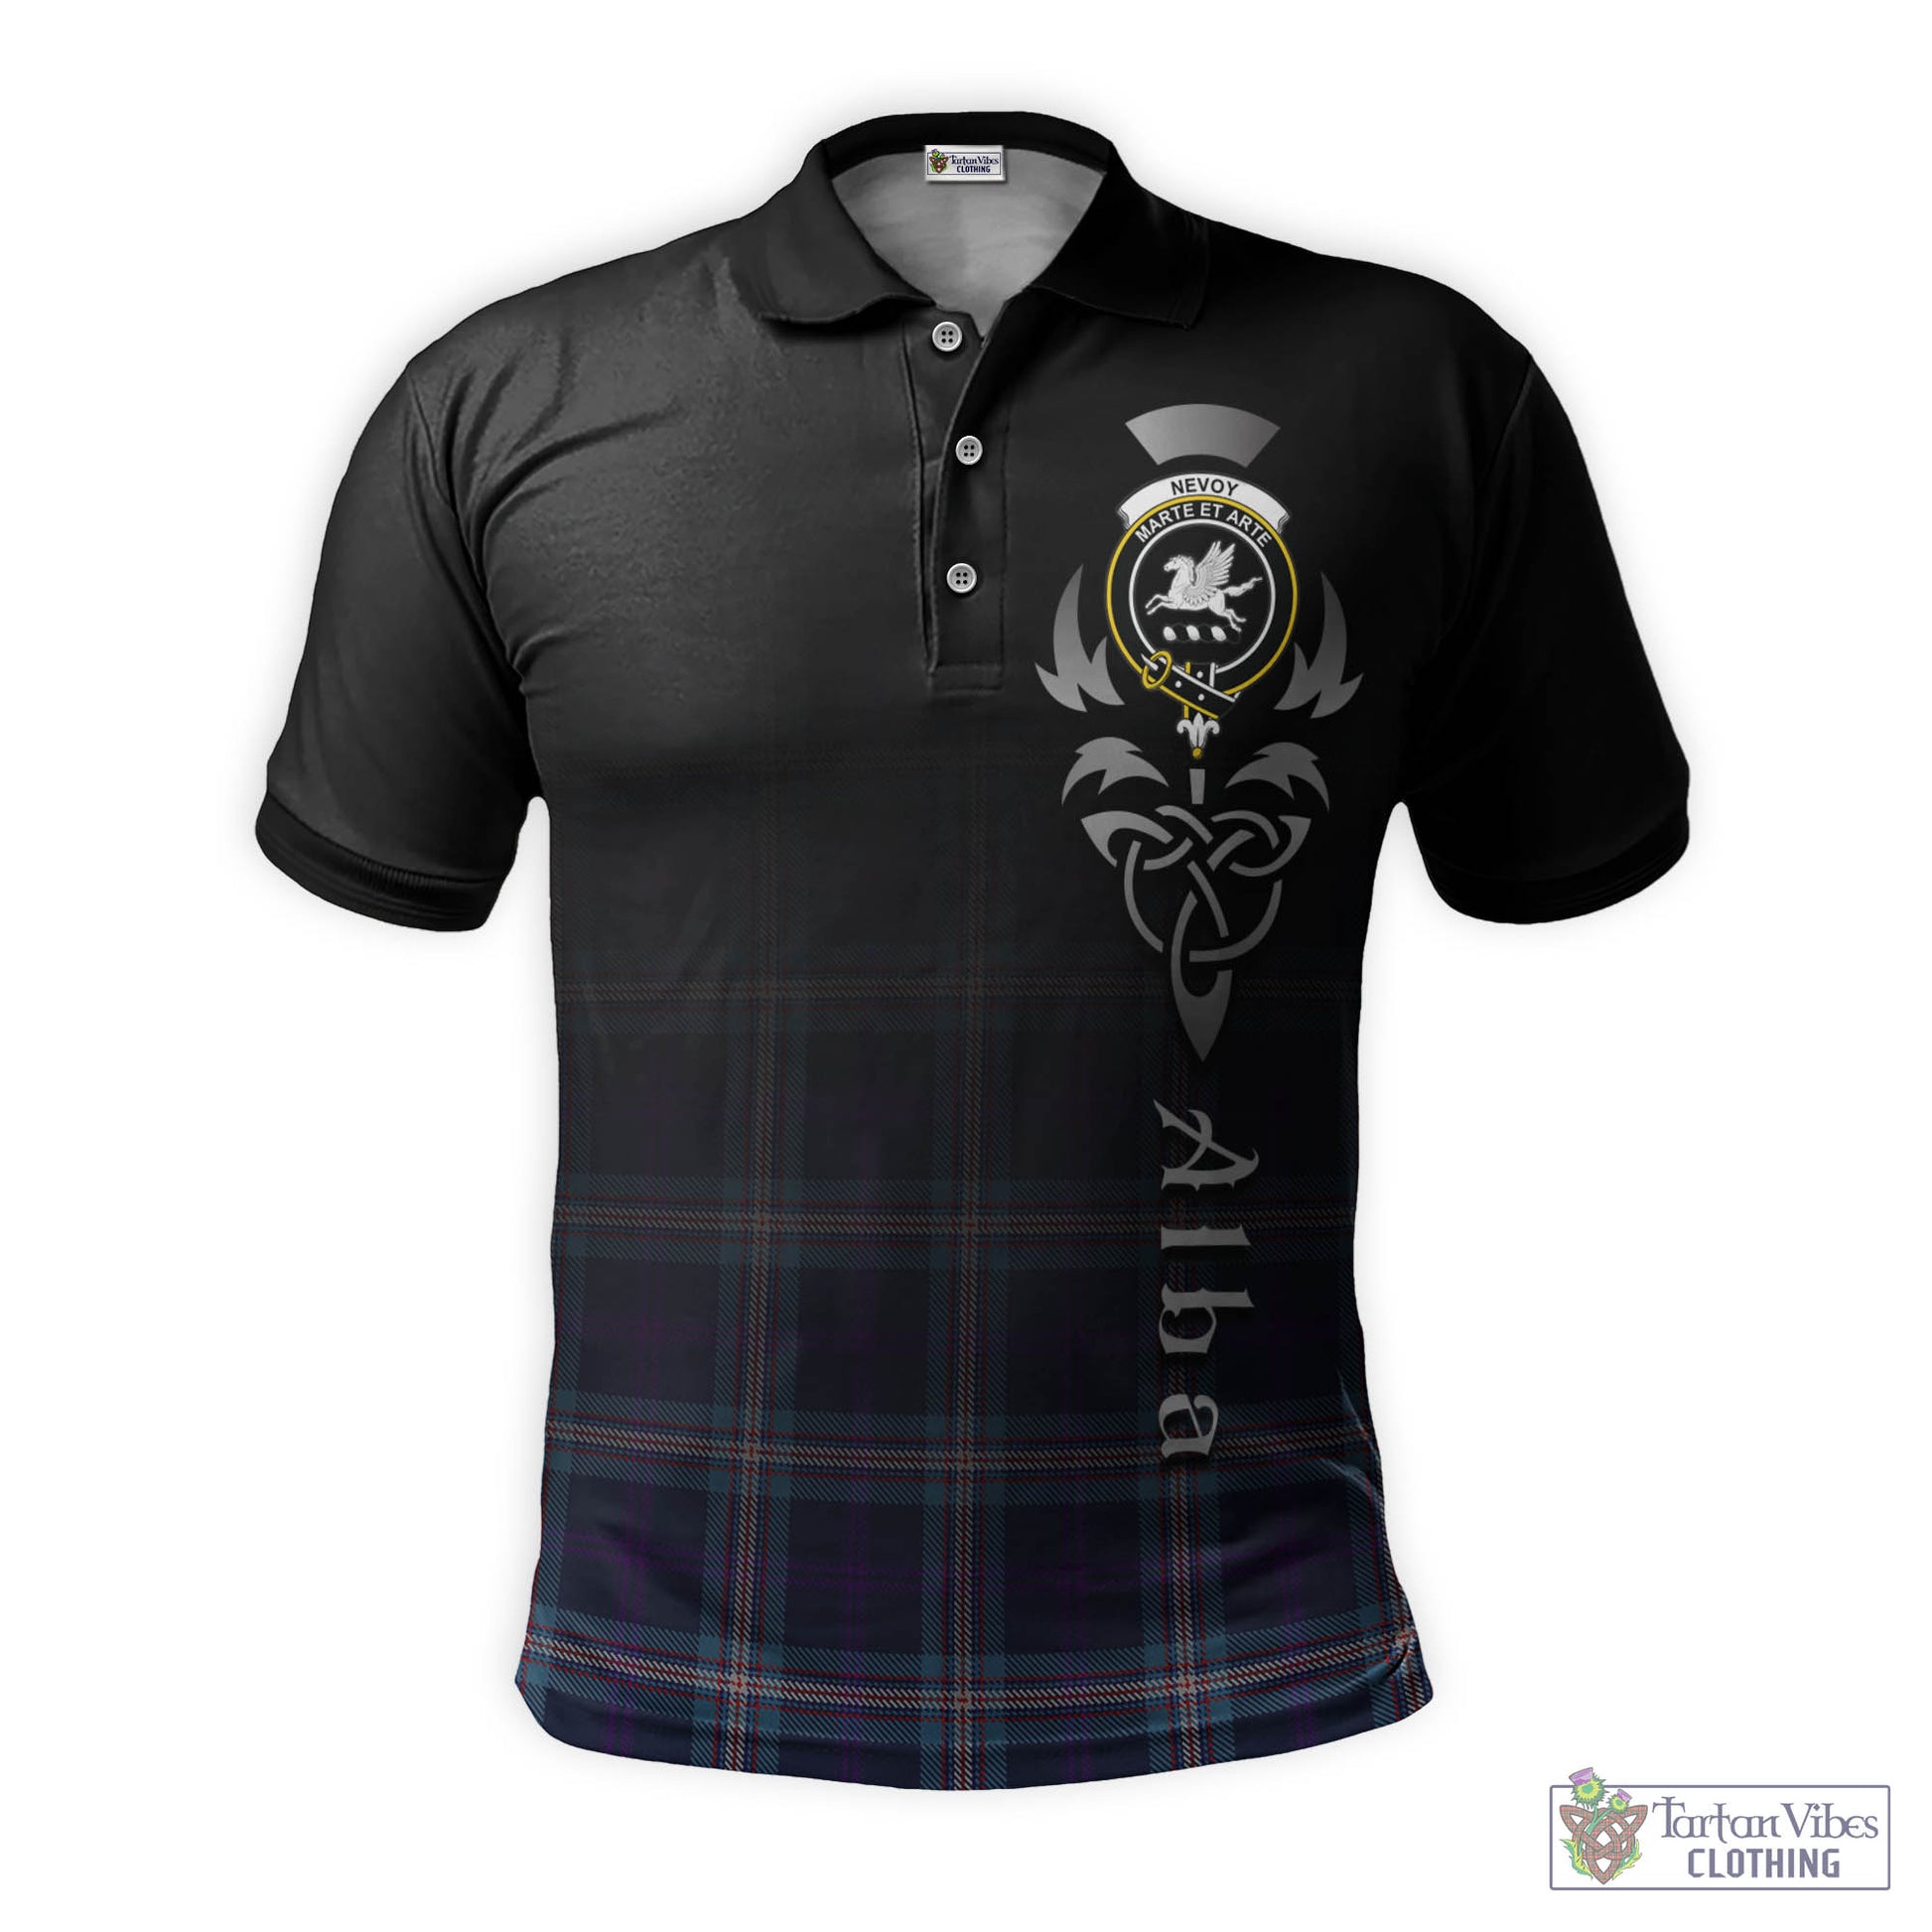 Tartan Vibes Clothing Nevoy Tartan Polo Shirt Featuring Alba Gu Brath Family Crest Celtic Inspired